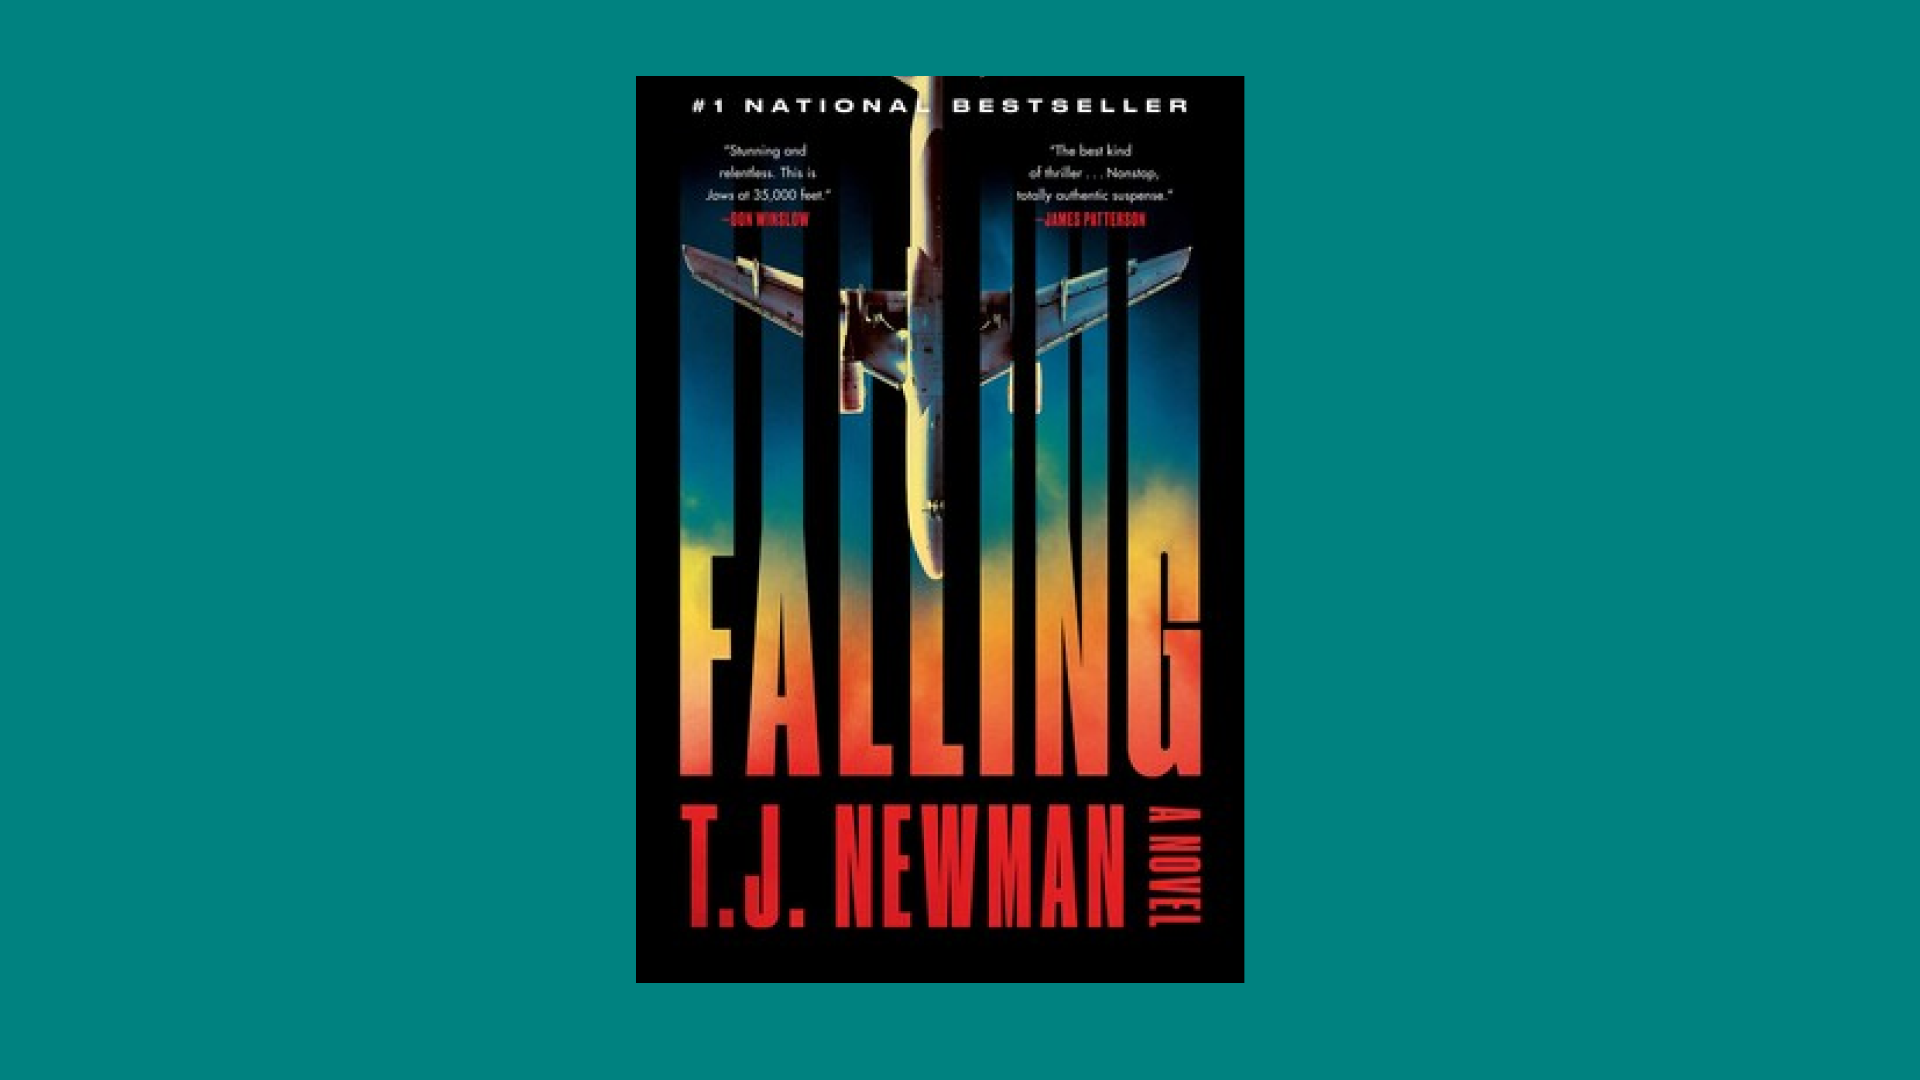 “Falling” by T.J. Newman